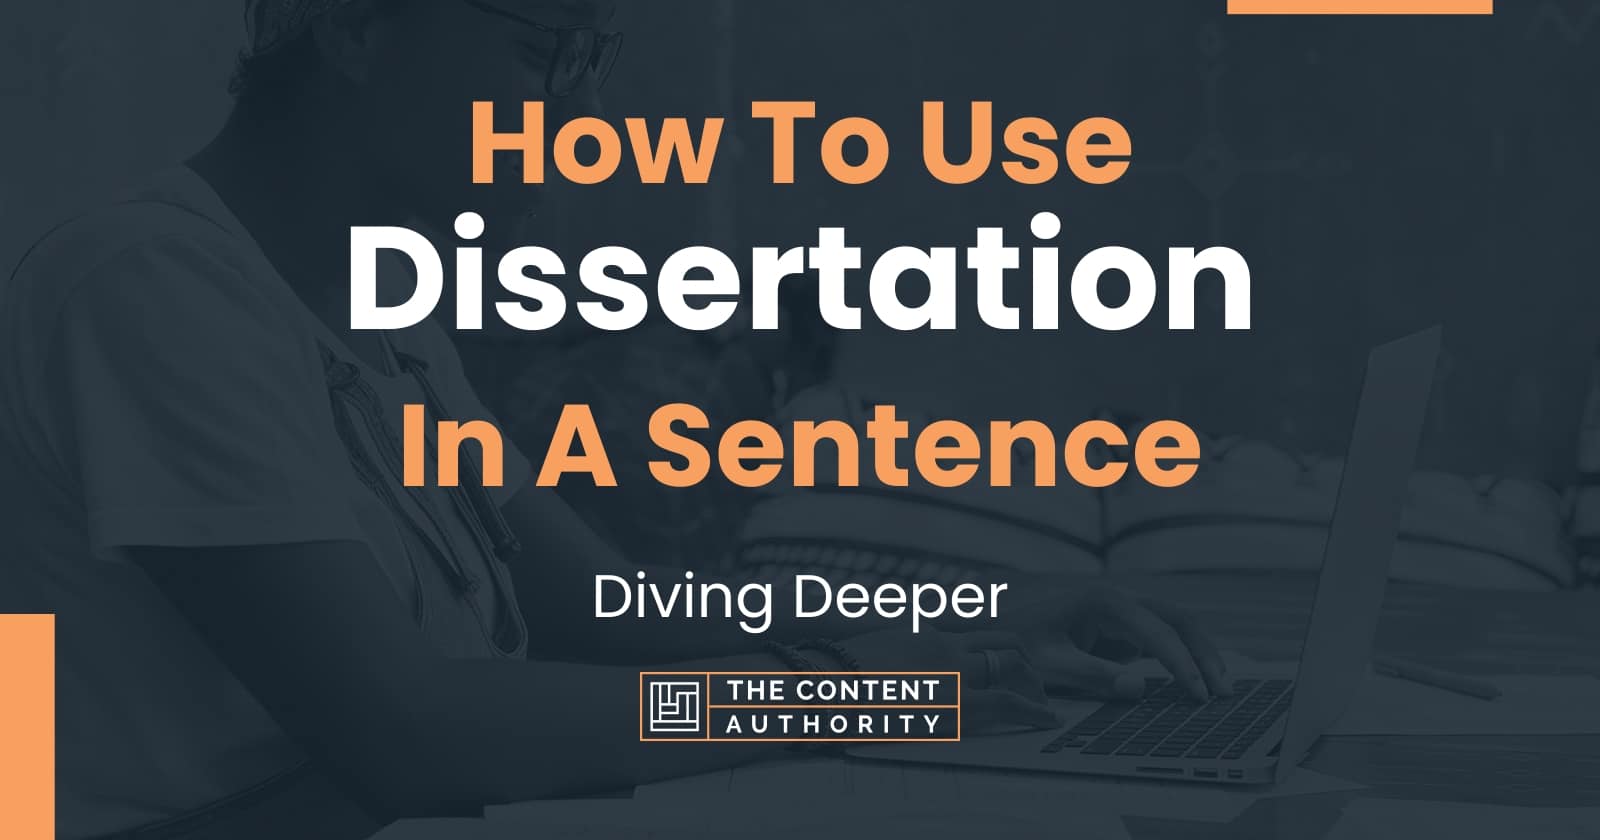 the sentence of dissertation